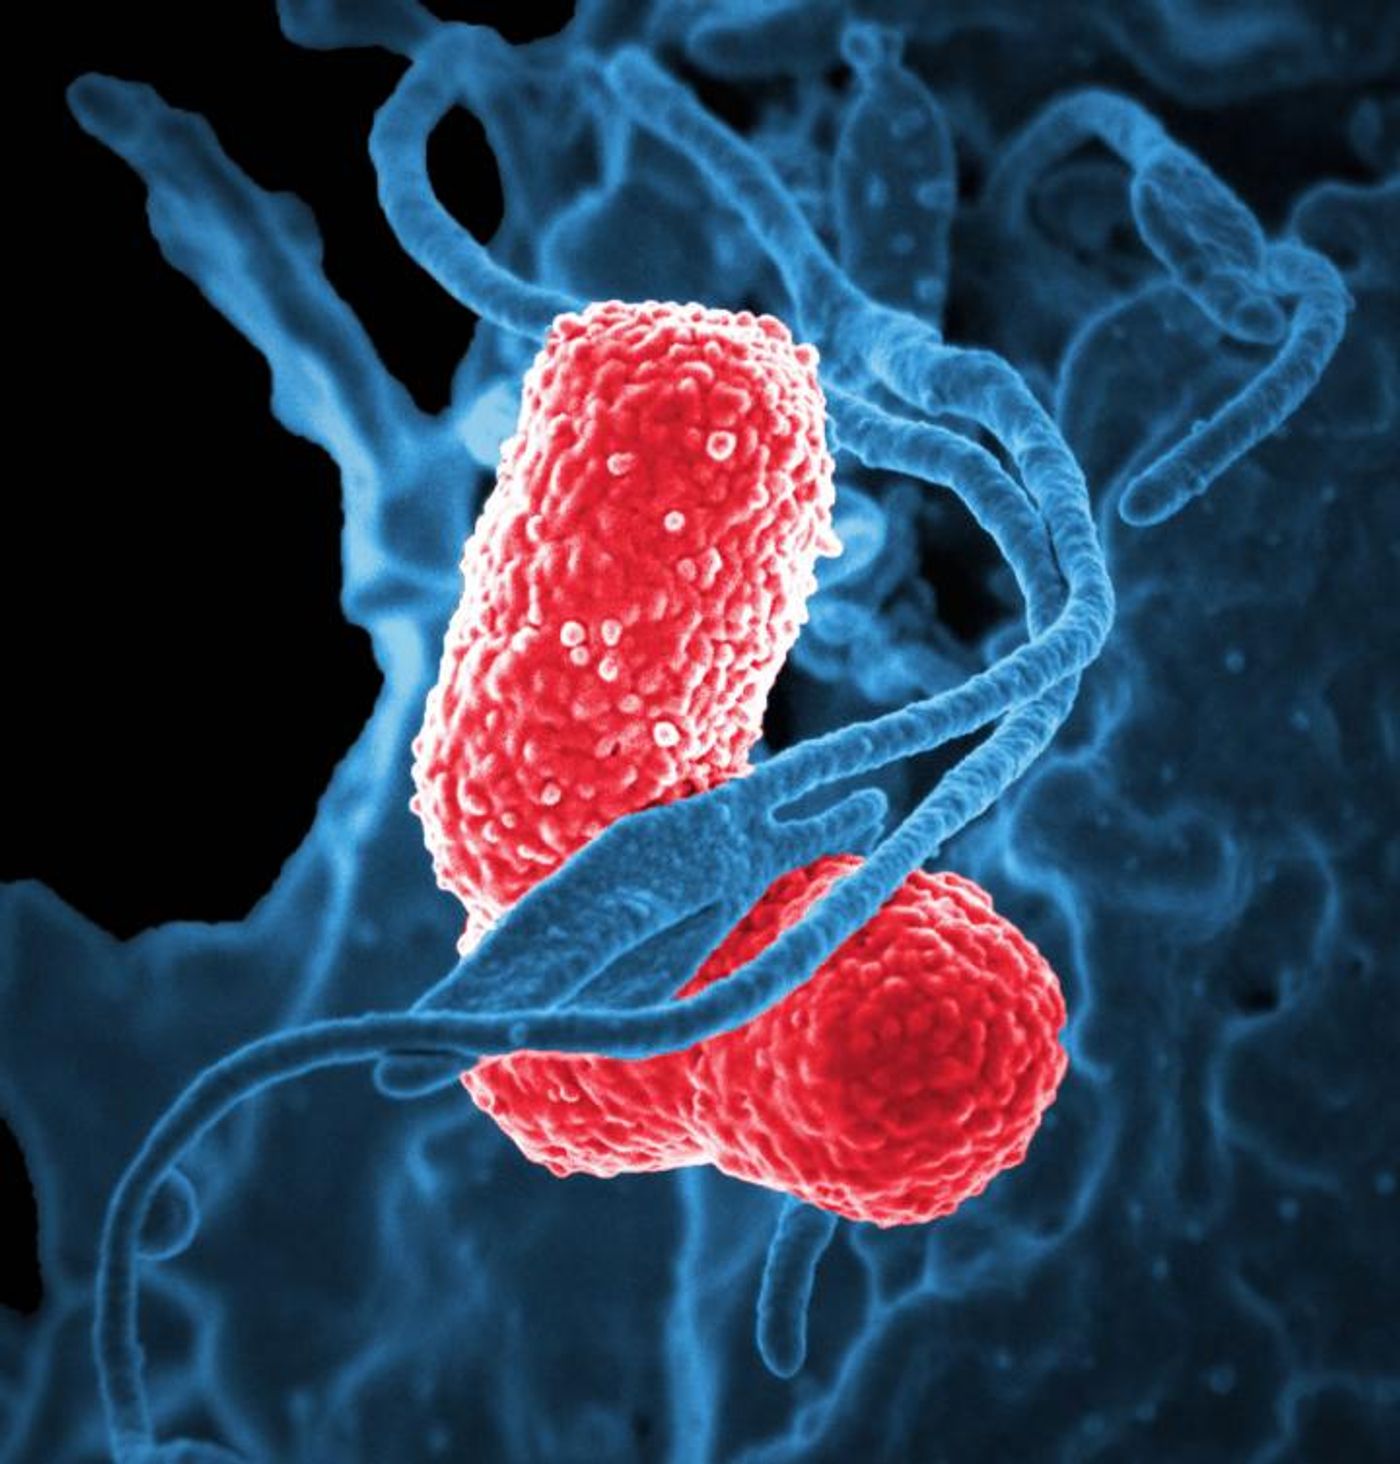 Klebsiella pneumoniae bacterium | Source: CDC Public Health Image Library